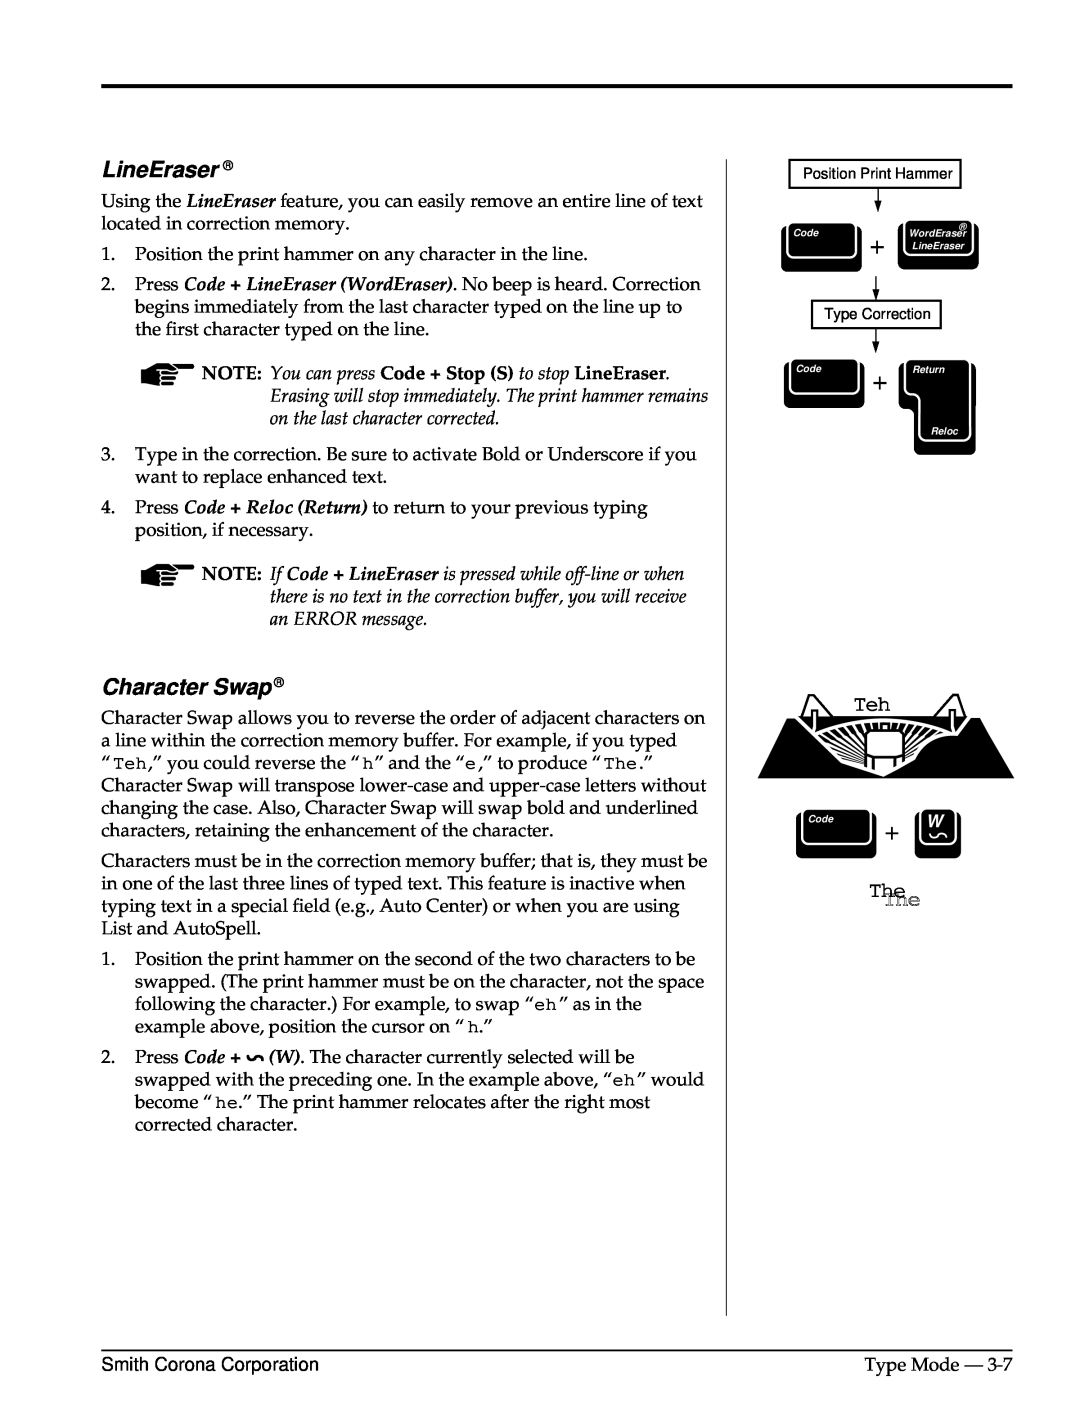 Smith Corona Computer Keyboard manual LineEraser, Character Swap, The The 